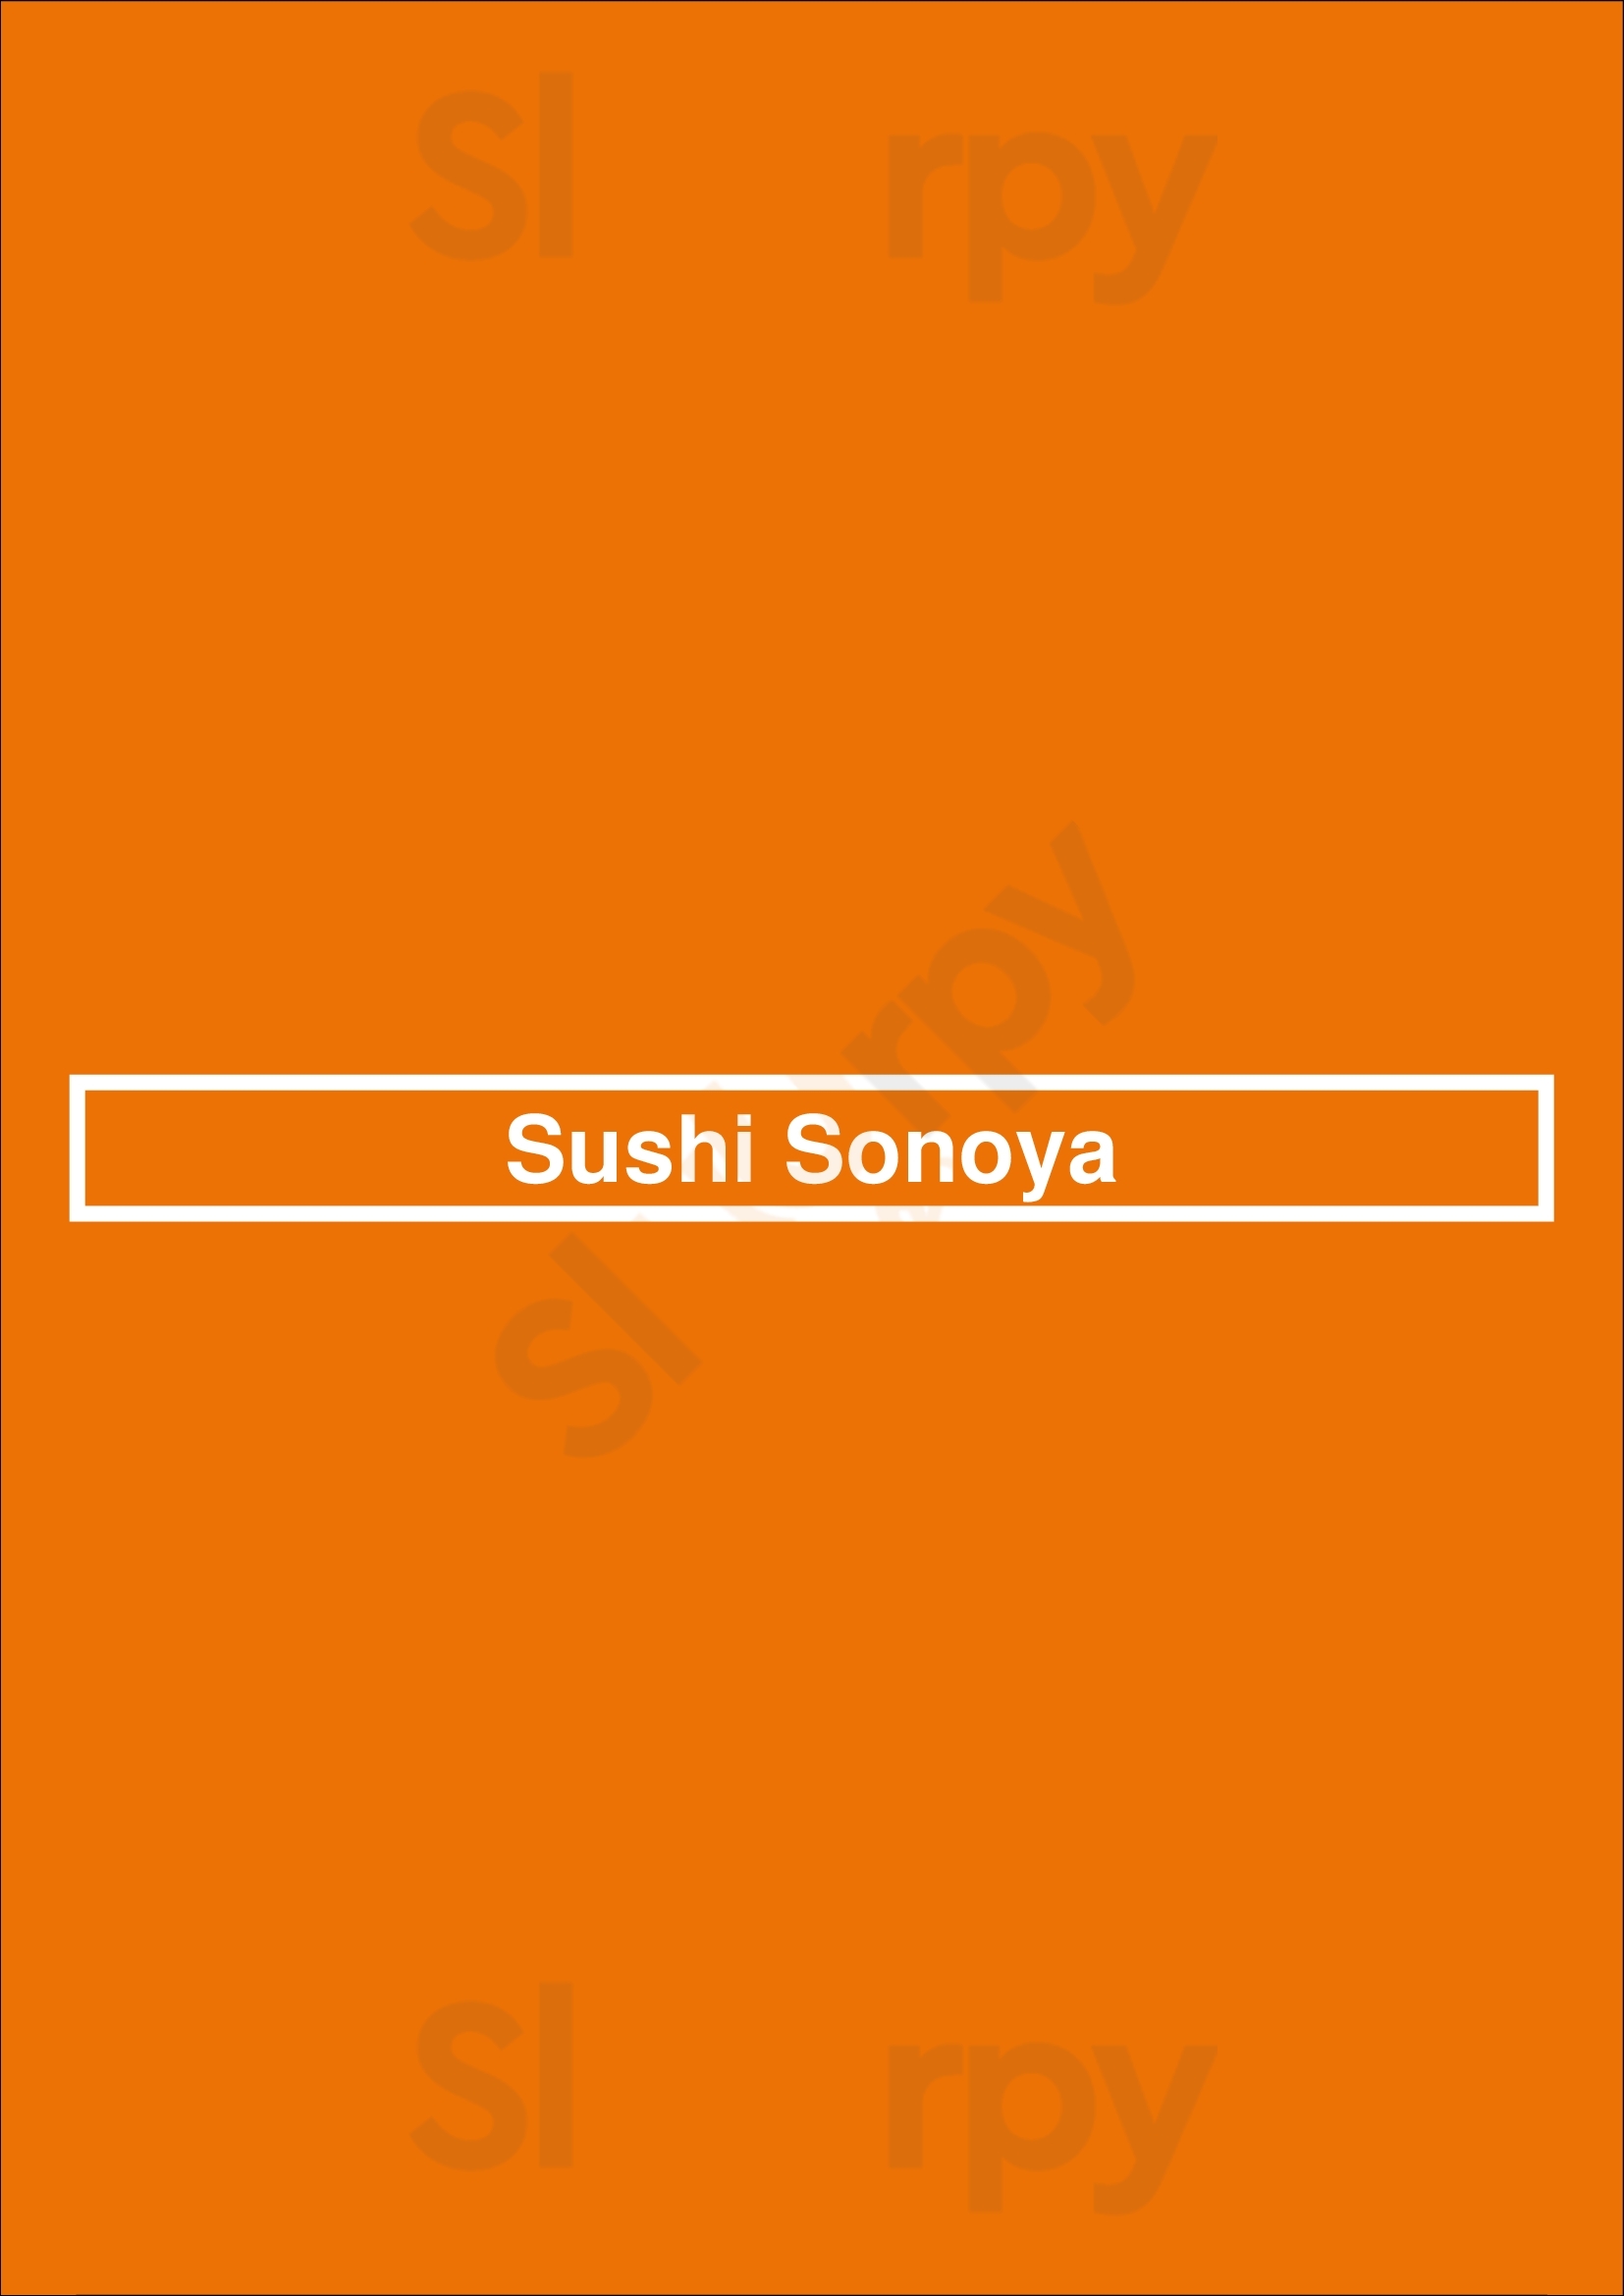 Sushi Sonoya Vancouver Menu - 1